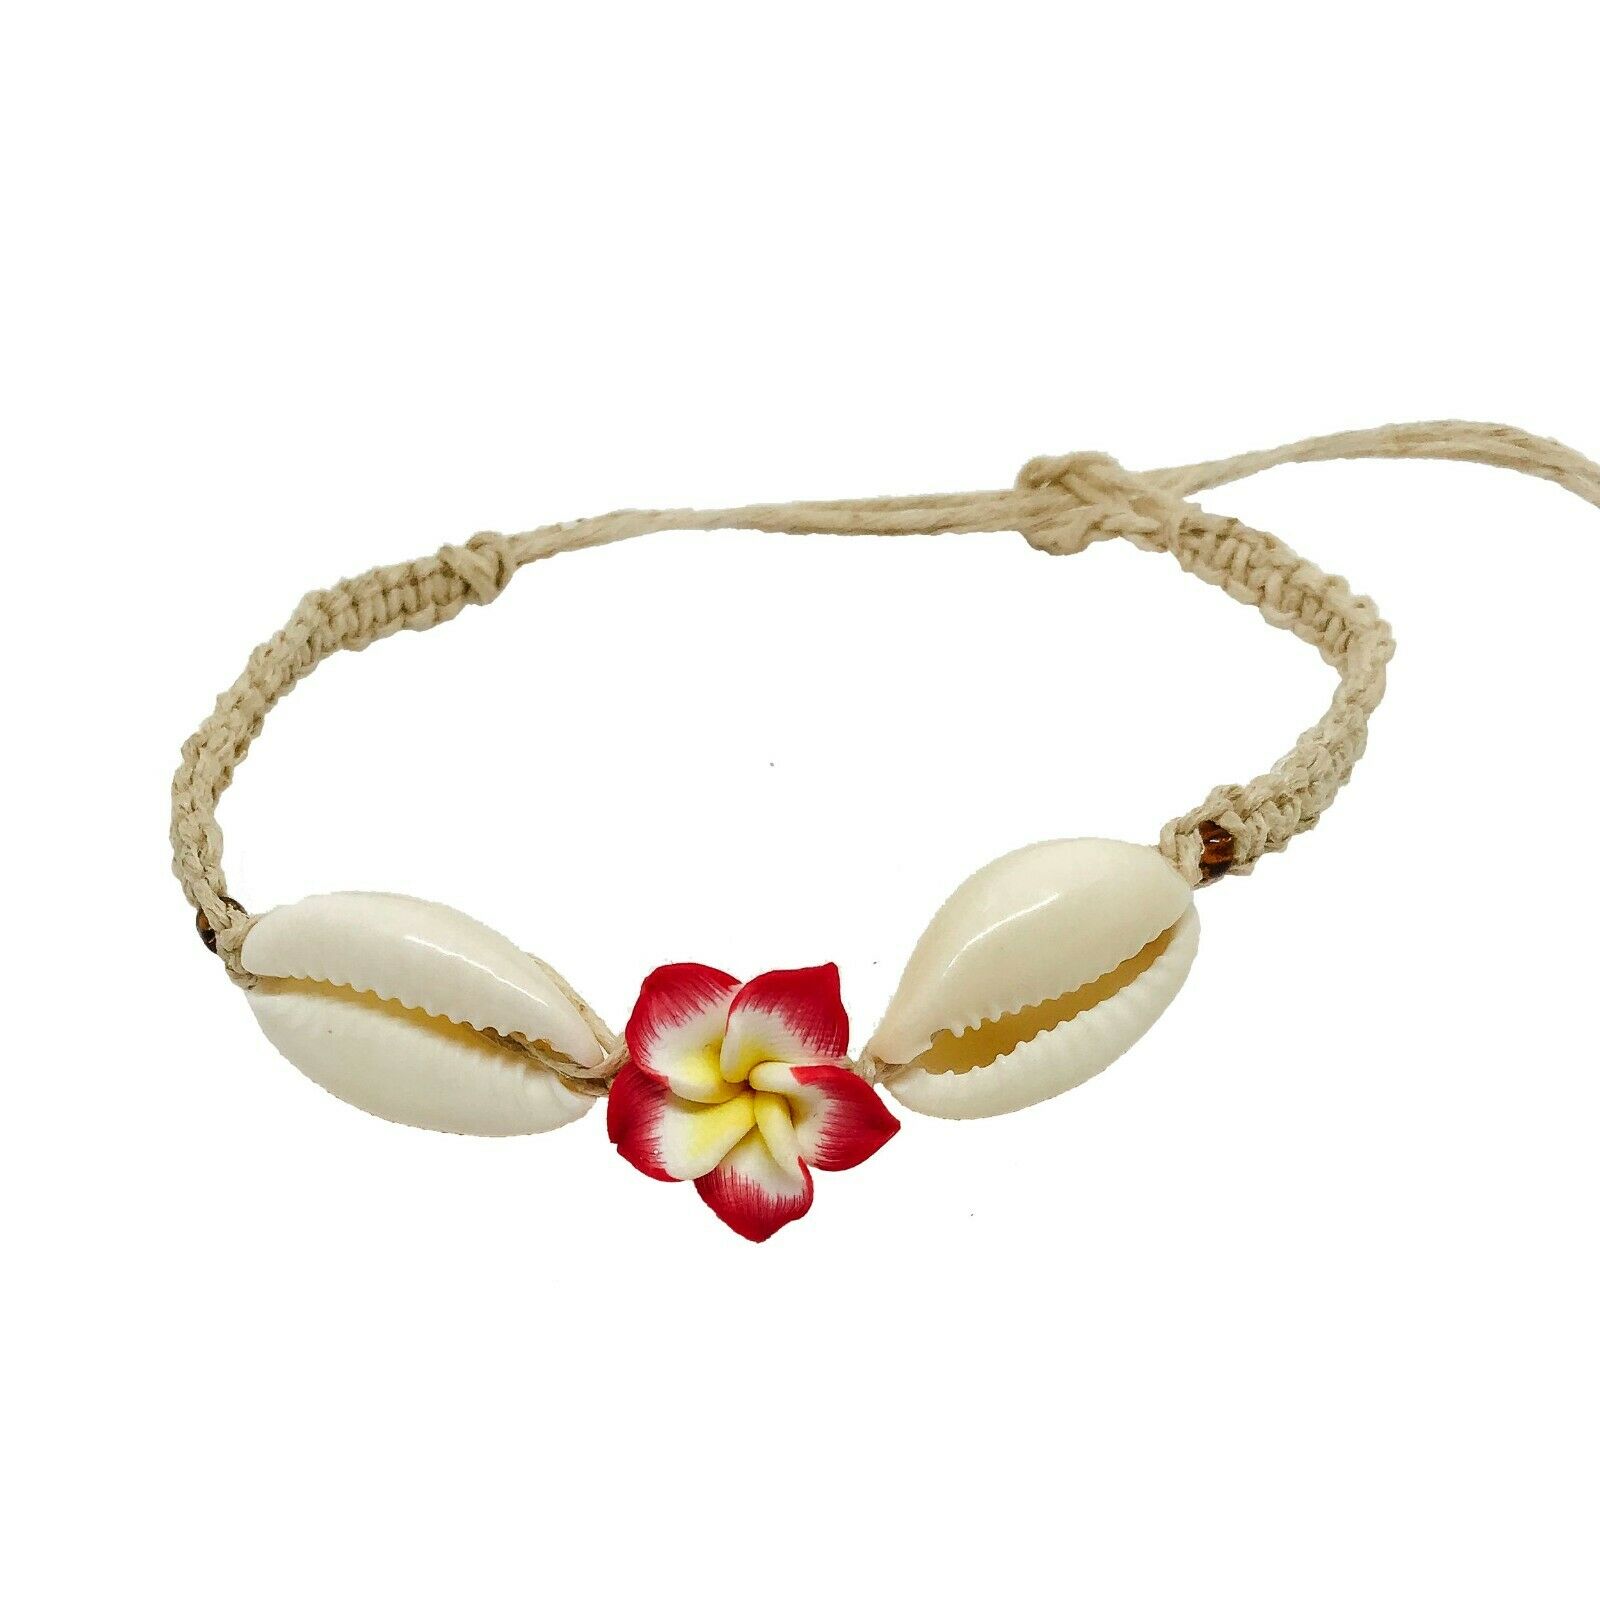 Hawaiian Jewelry Hand Tied Red Plumeria Flower and Shell Hemp Bracelet / Anklet